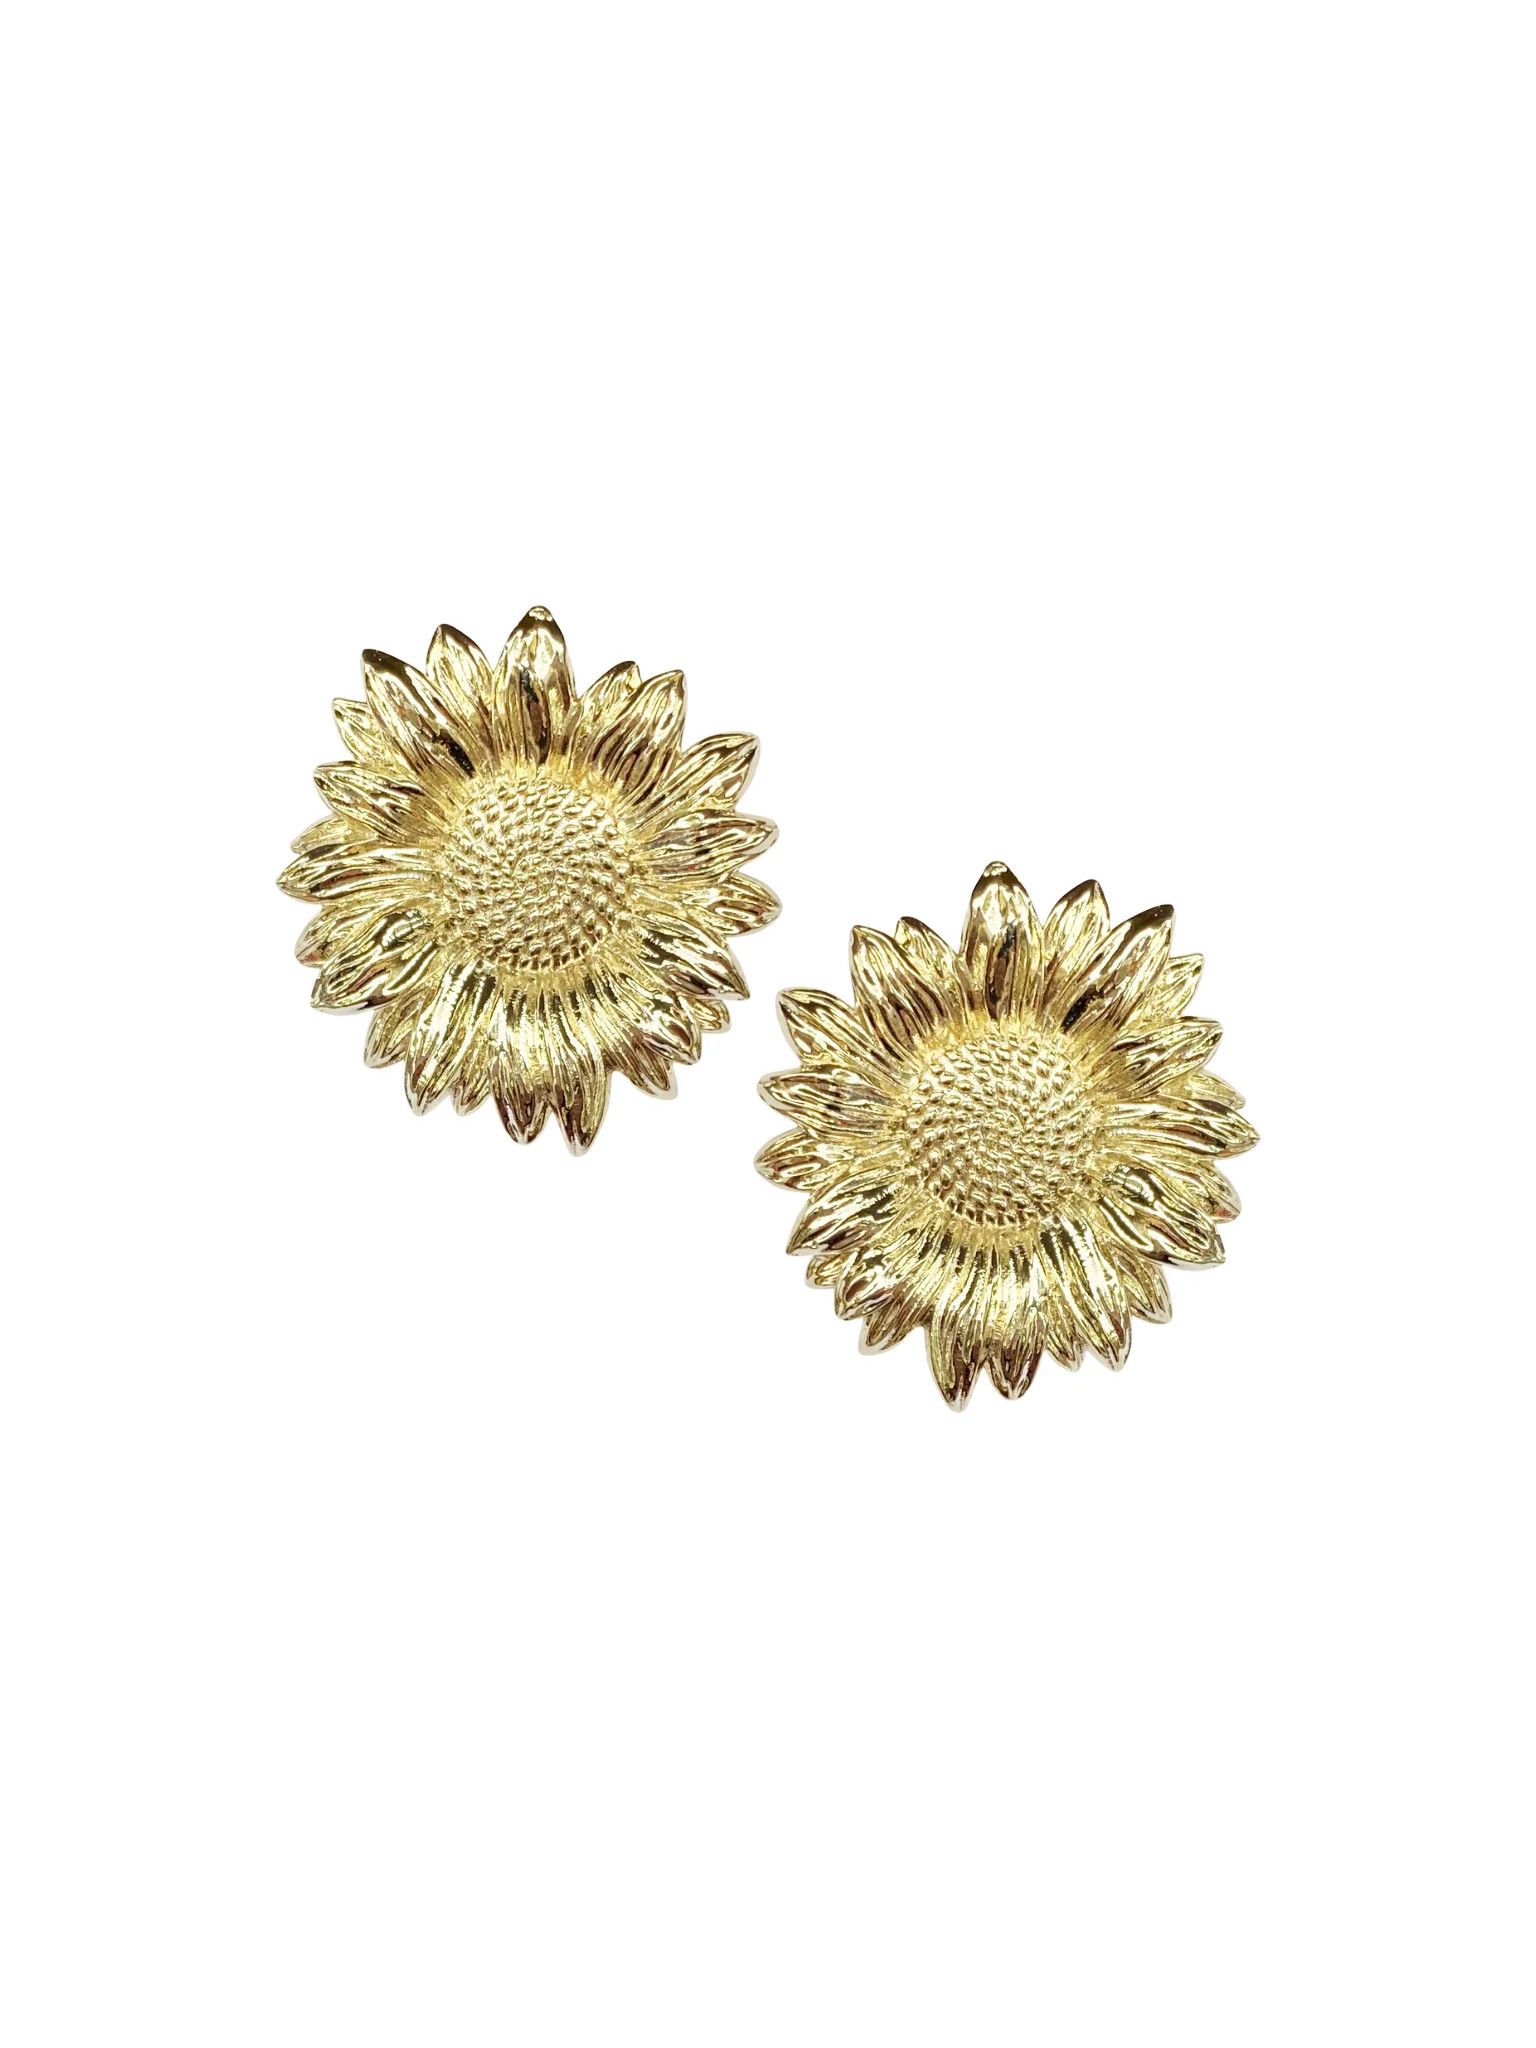 Provence Sunflower | Nicola Bathie Jewelry